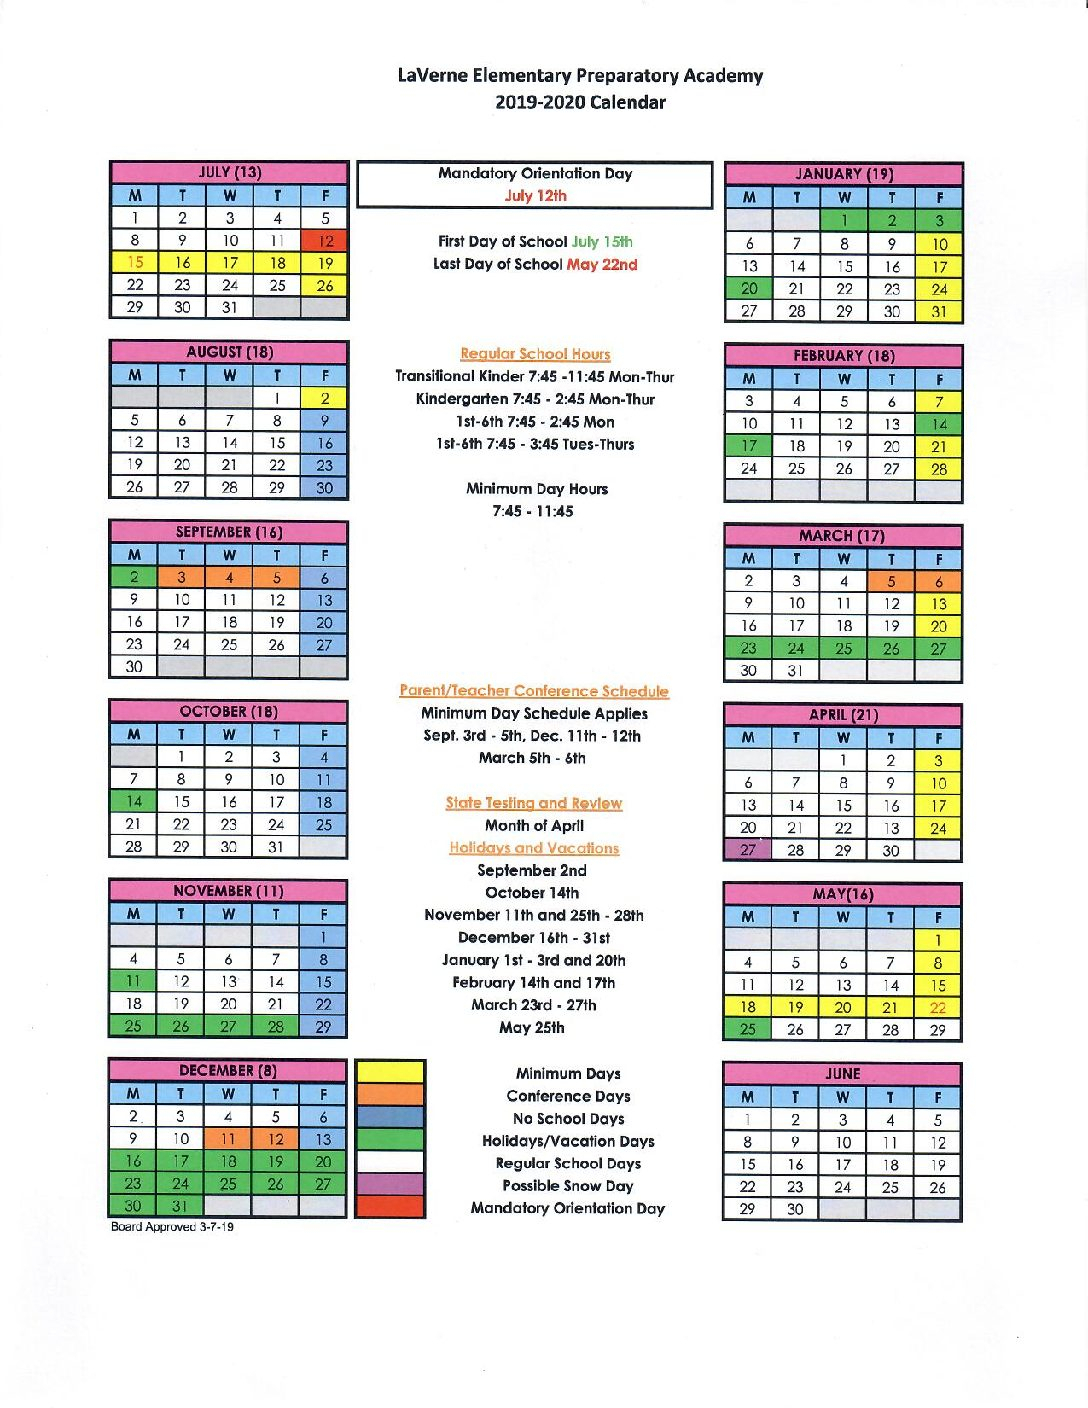 La Joya Independent School District Calendar | Printable